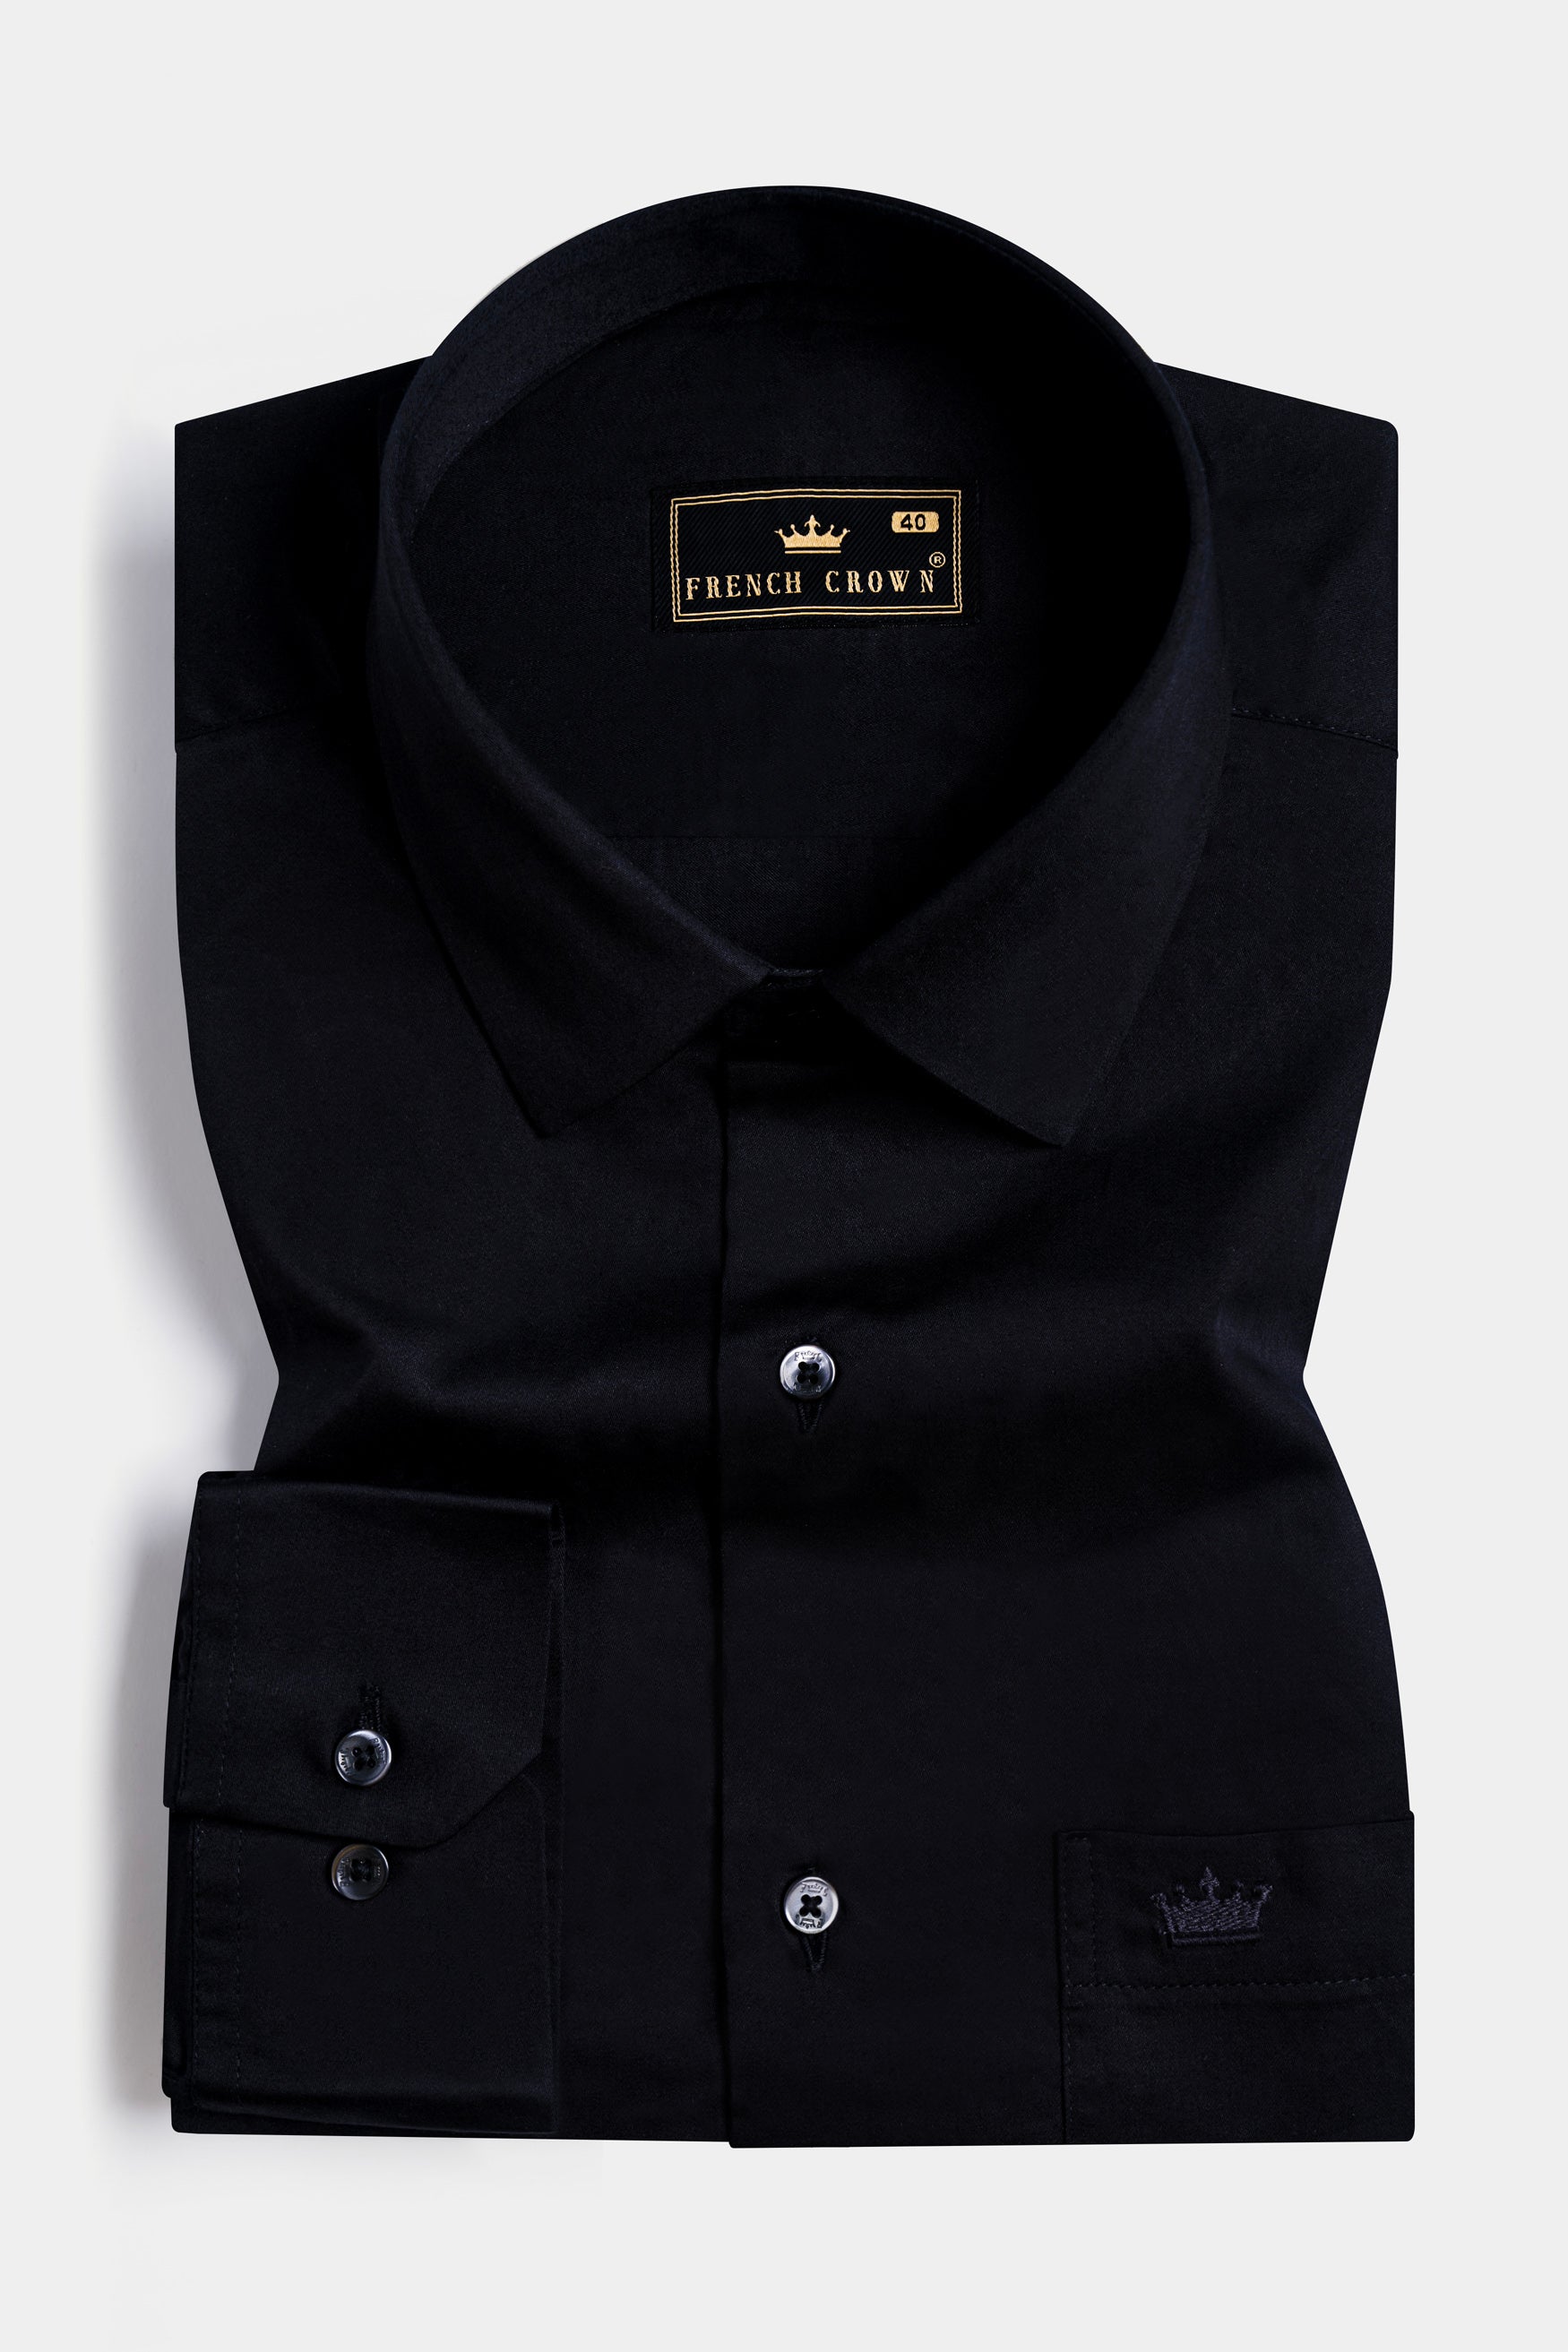 Jade Black French Crown Printed Subtle Sheen Super Soft Premium Cotton Designer Shirt